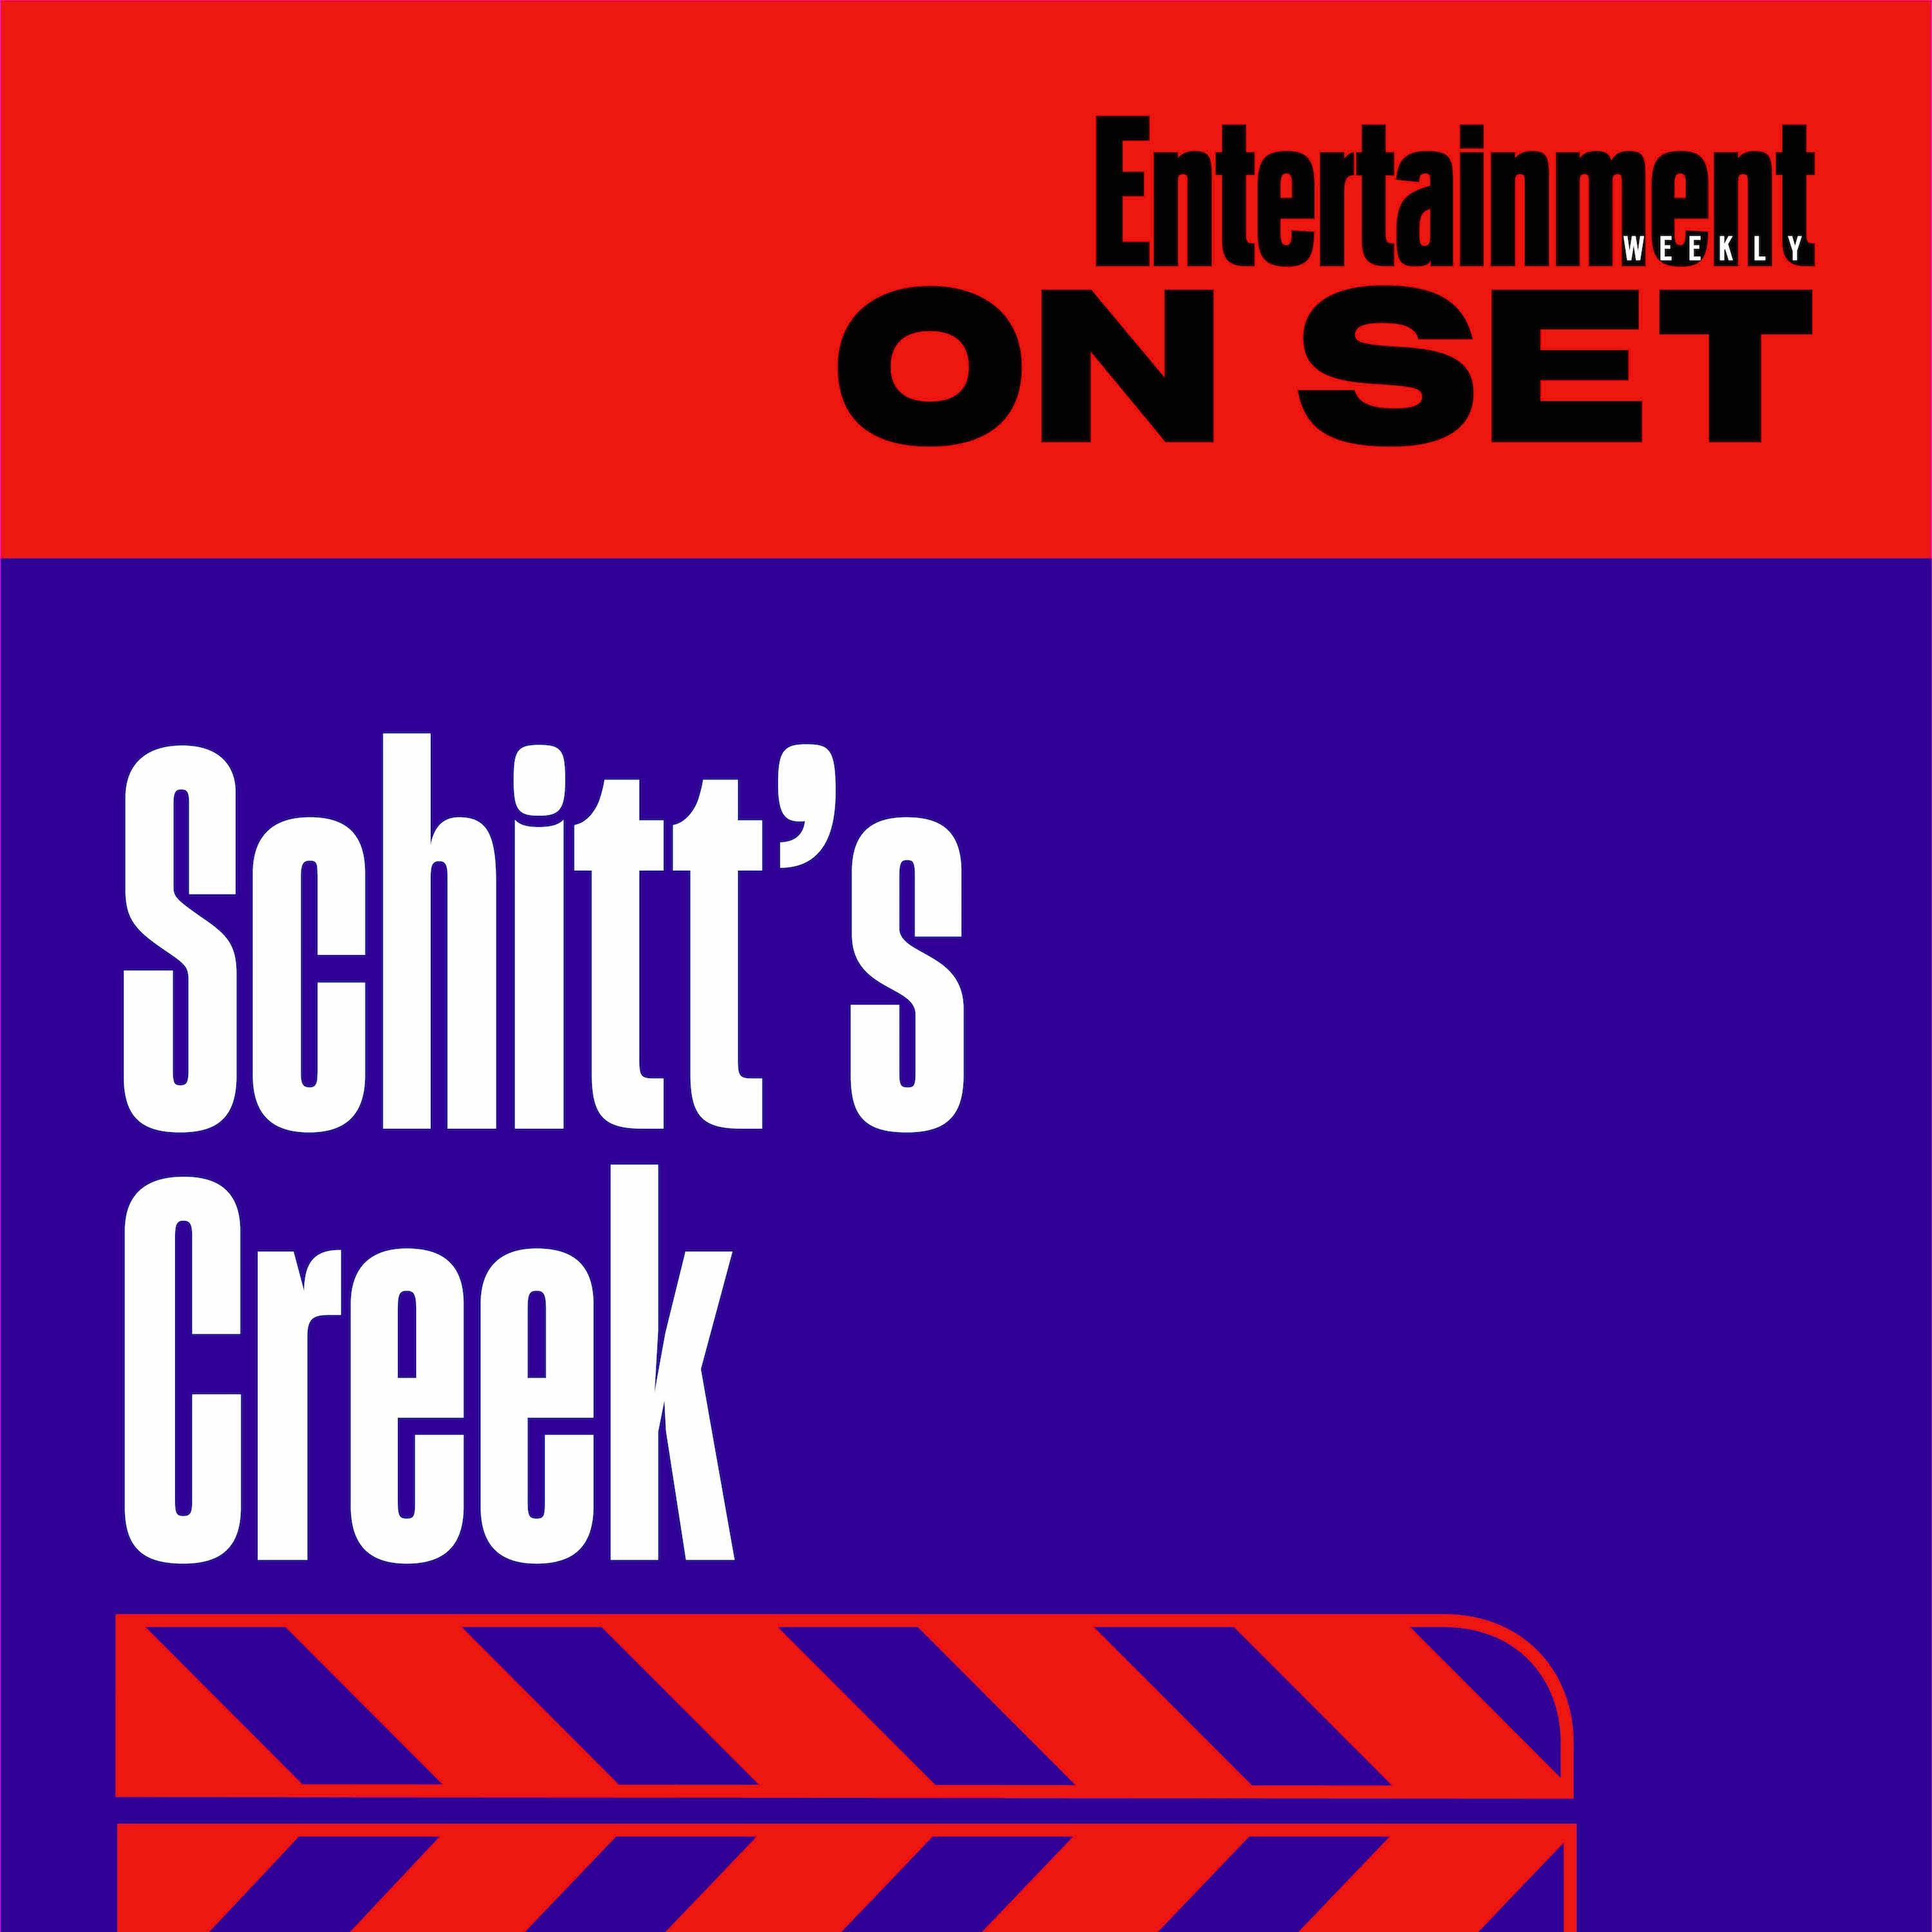 EW On Set: Schitt's Creek Episode 6.06 "The Wingman"